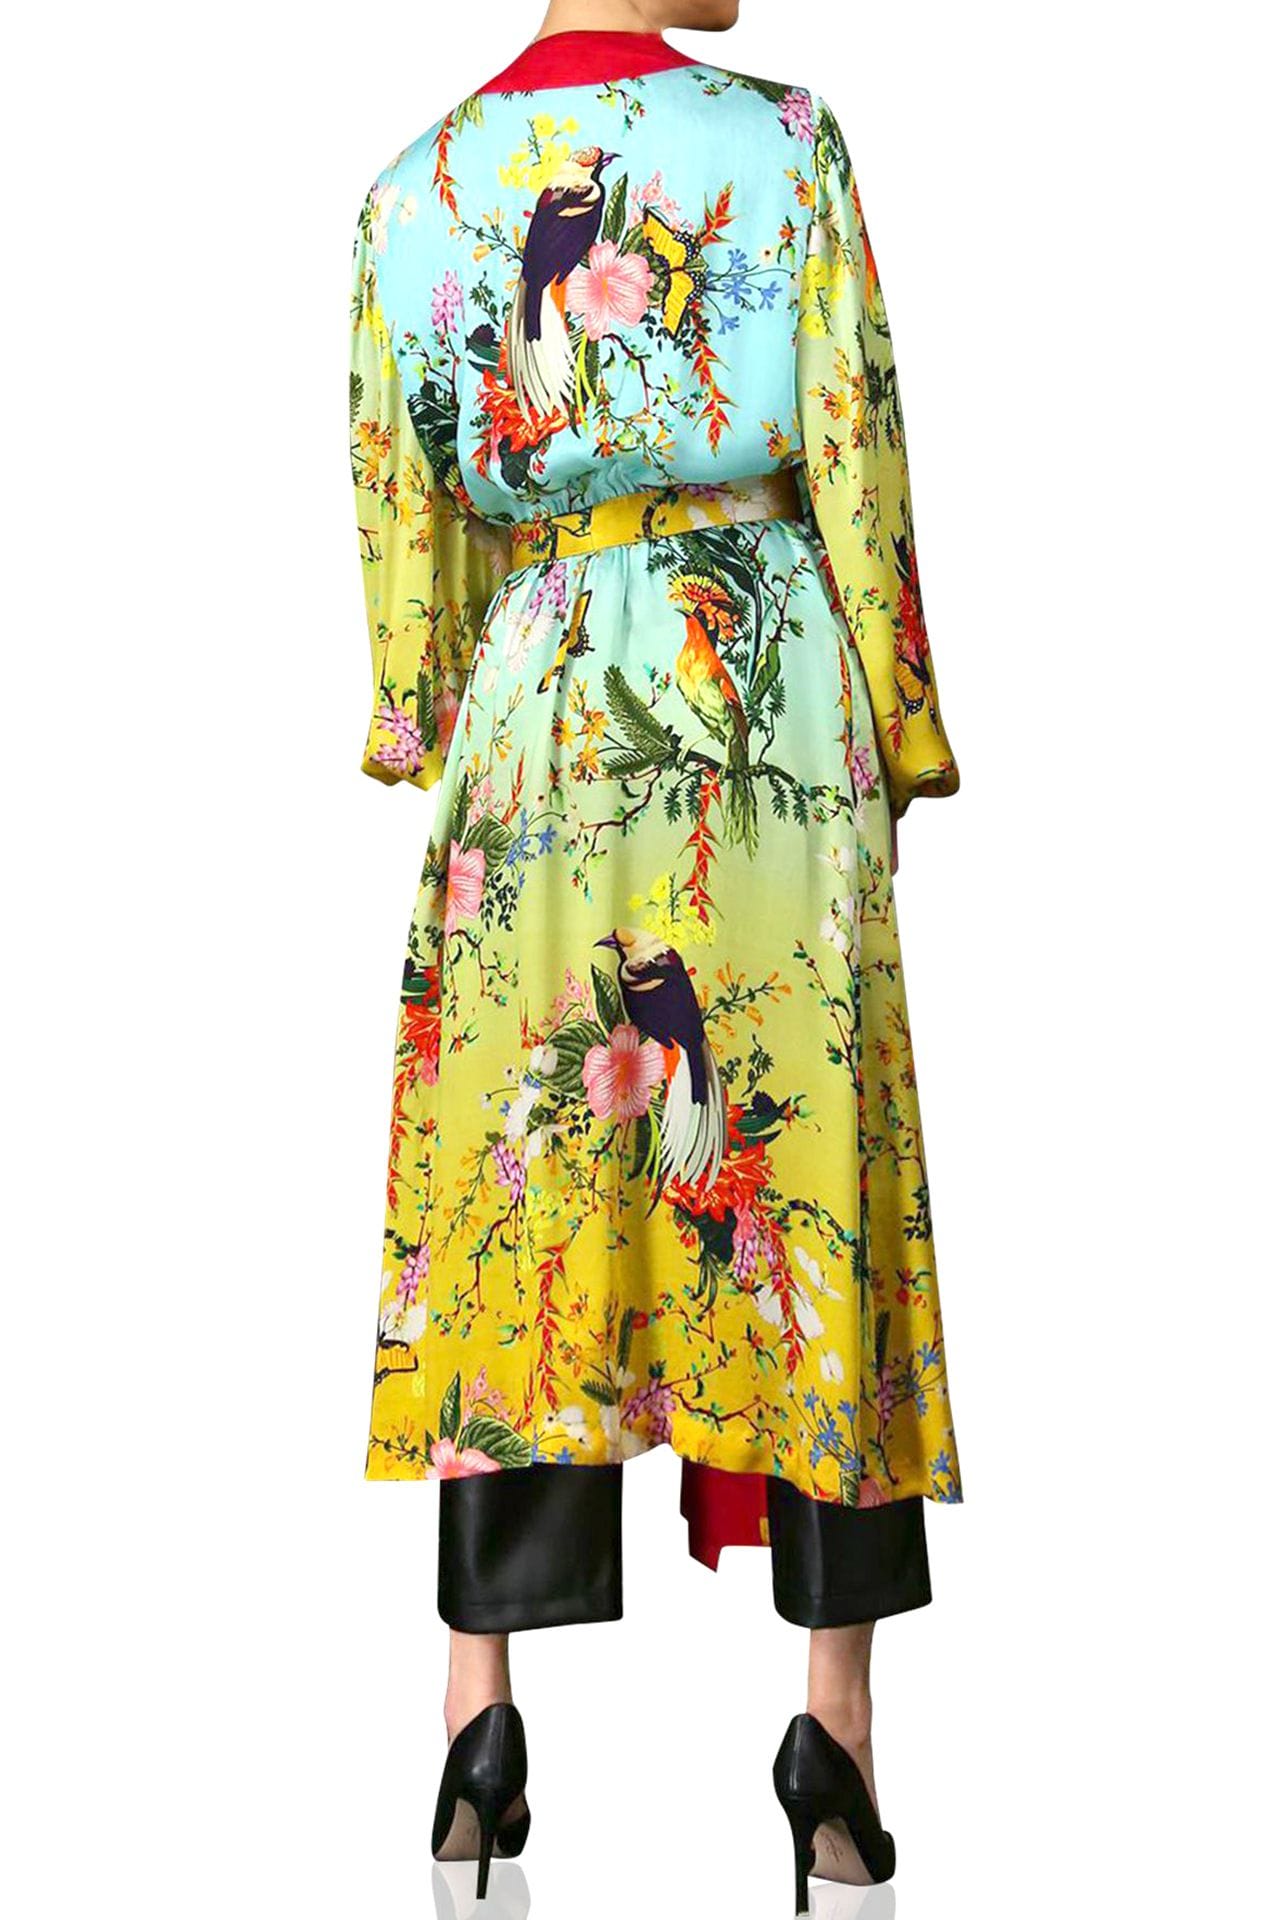  "Kyle X Shahida" "beautiful kimono" "yellow silk robe" "designer kimono" "robe dress silk"